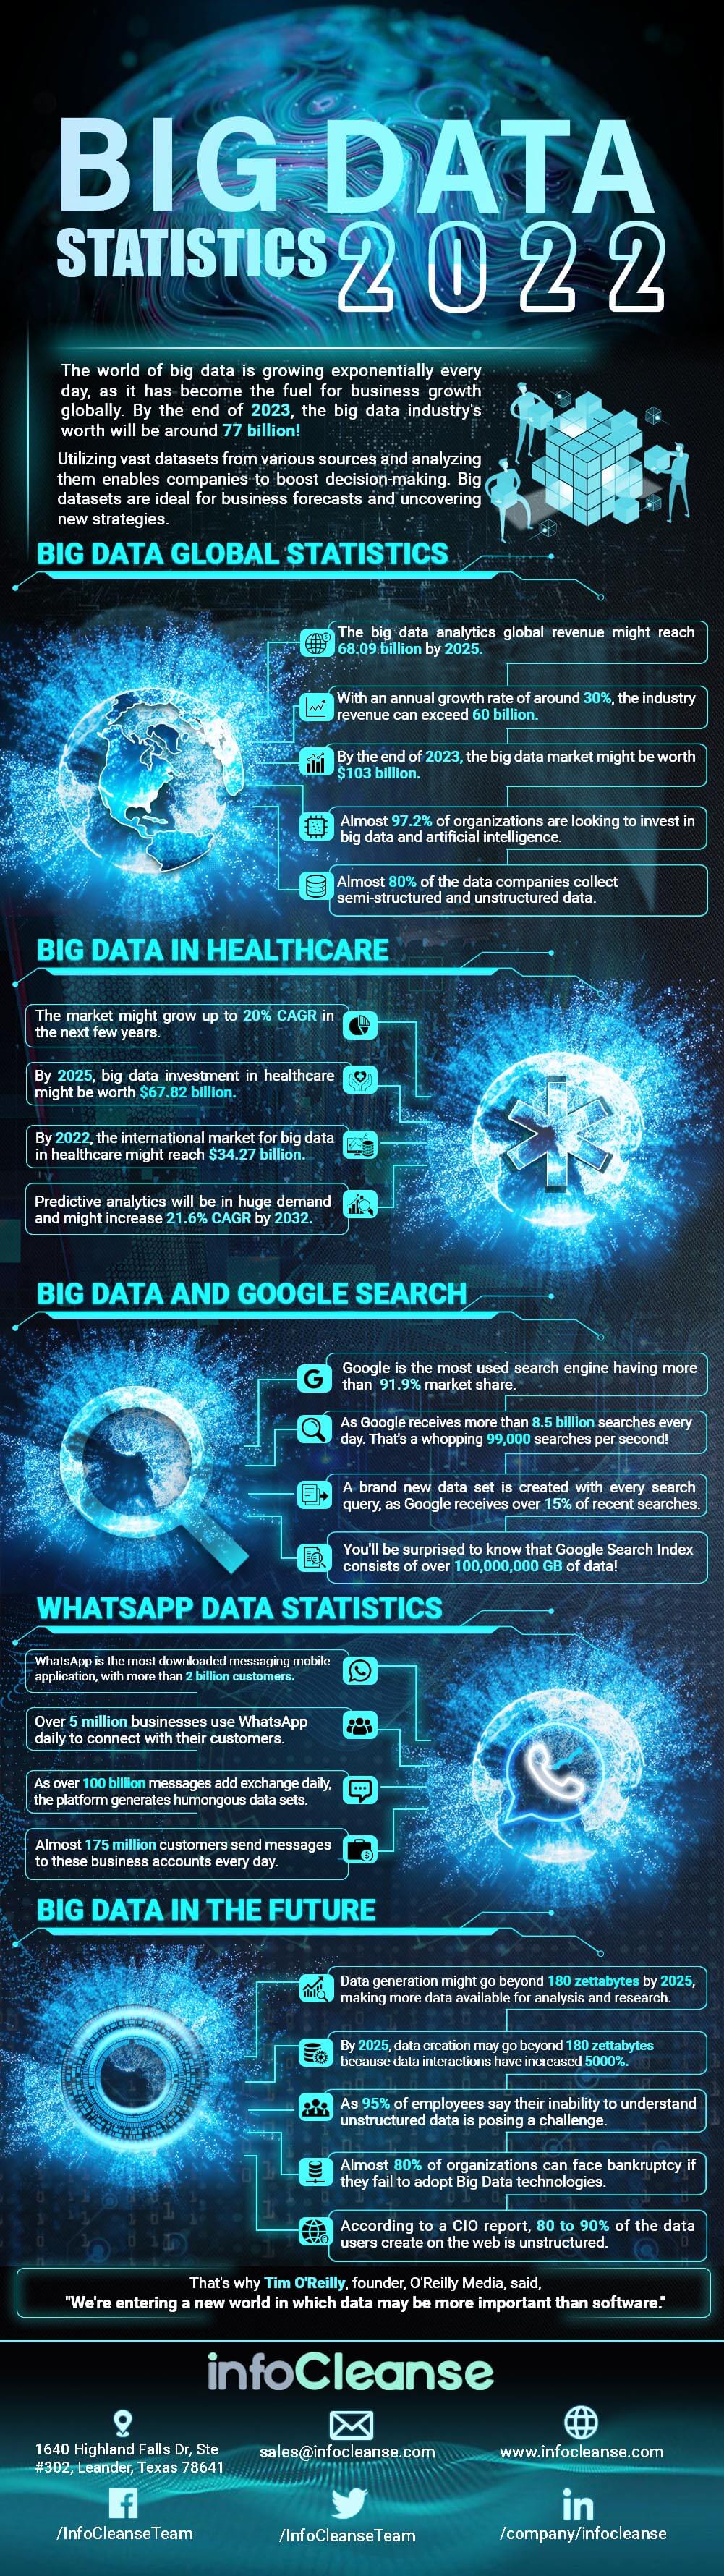 Big Data Statistics 2022- InfoCleanse